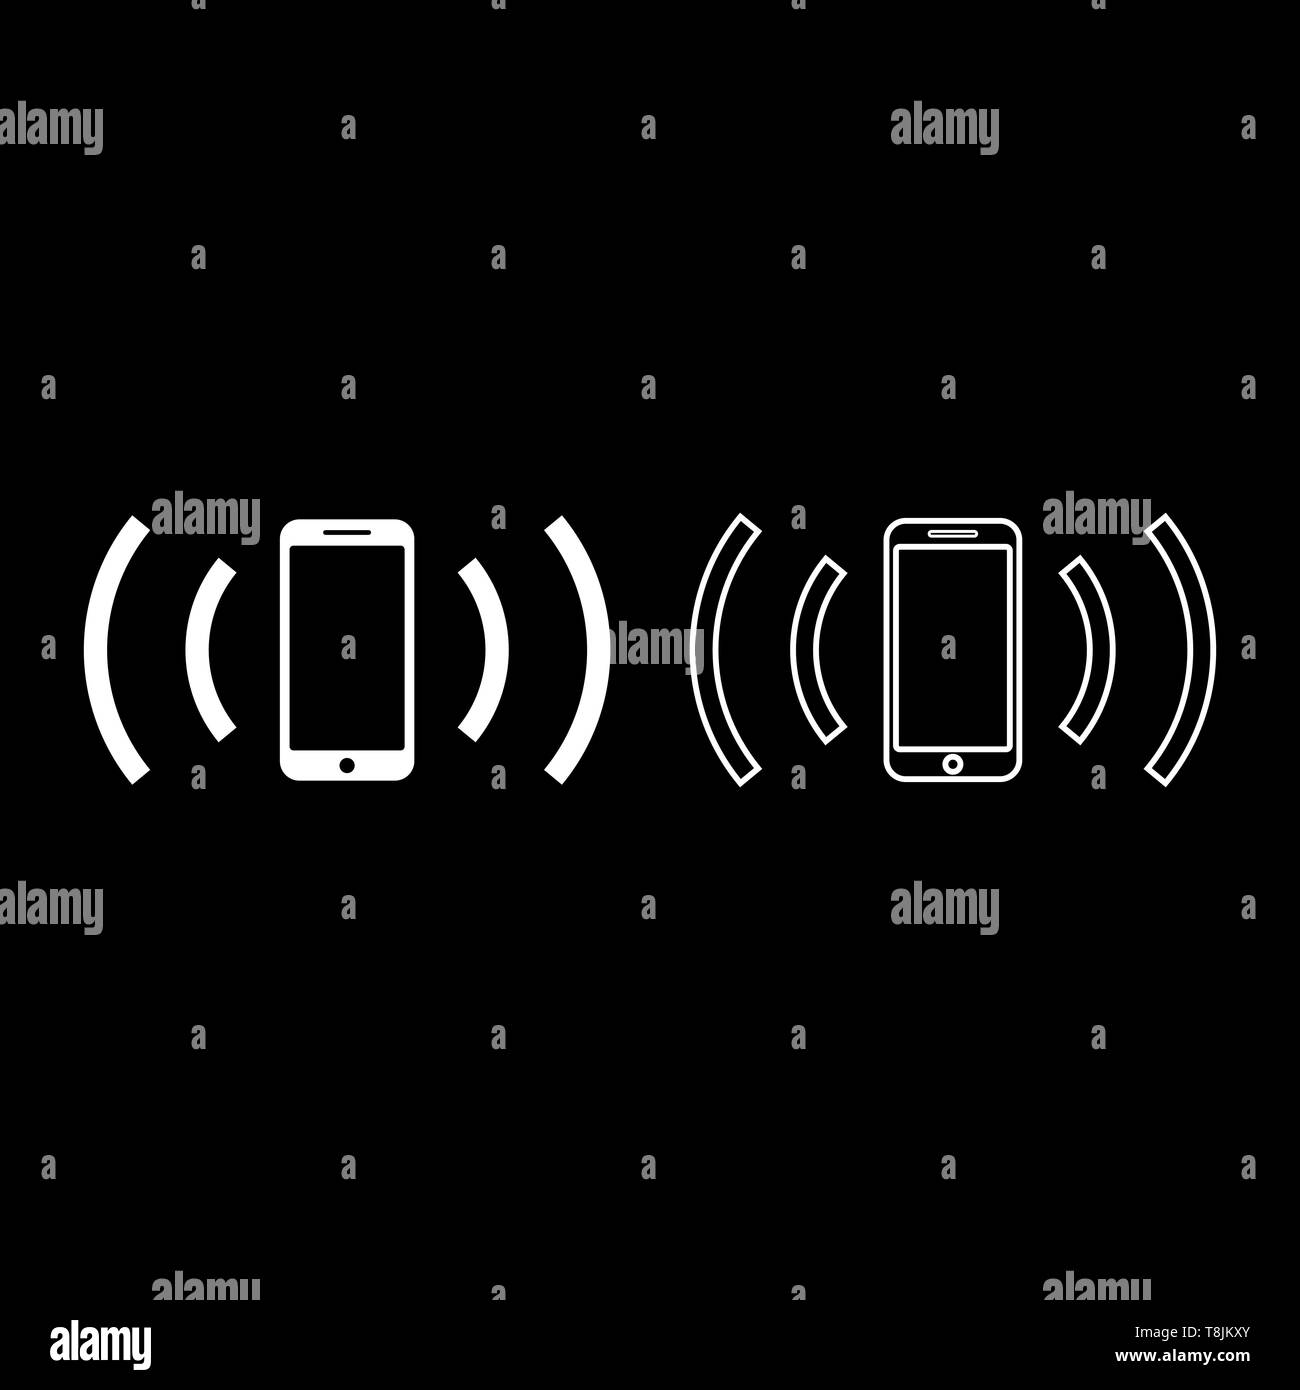 Smartphone sendet Funkwellen Schallwelle emittierenden Wellen Konzept Symbol outline weiß Farbe Vektor-illustration Flat Style simple Image Stock Vektor